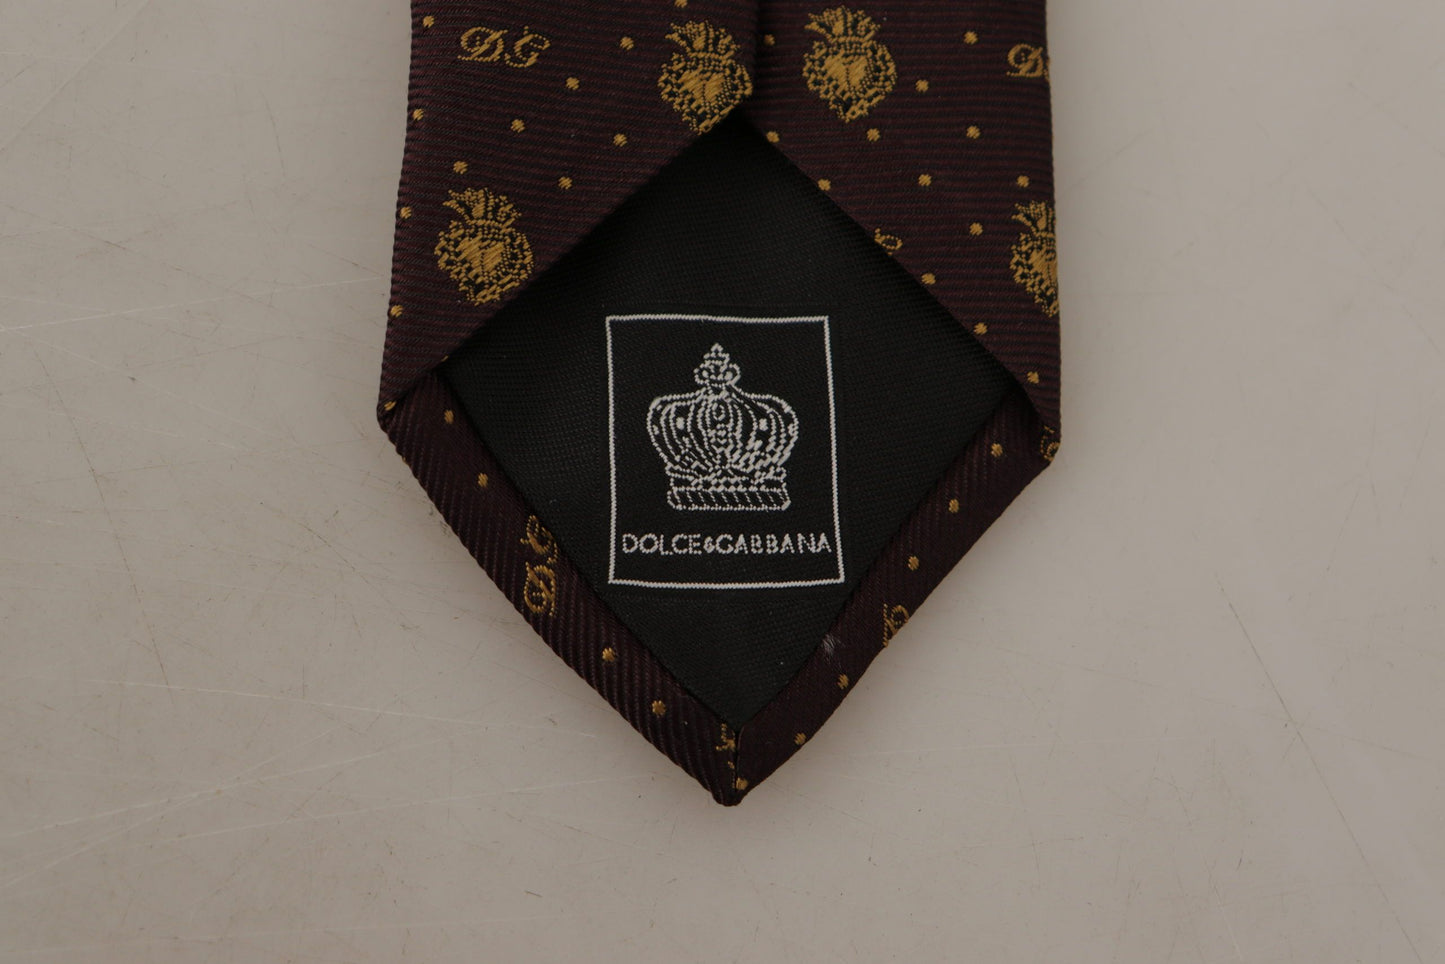 Elegant Black Silk Tie